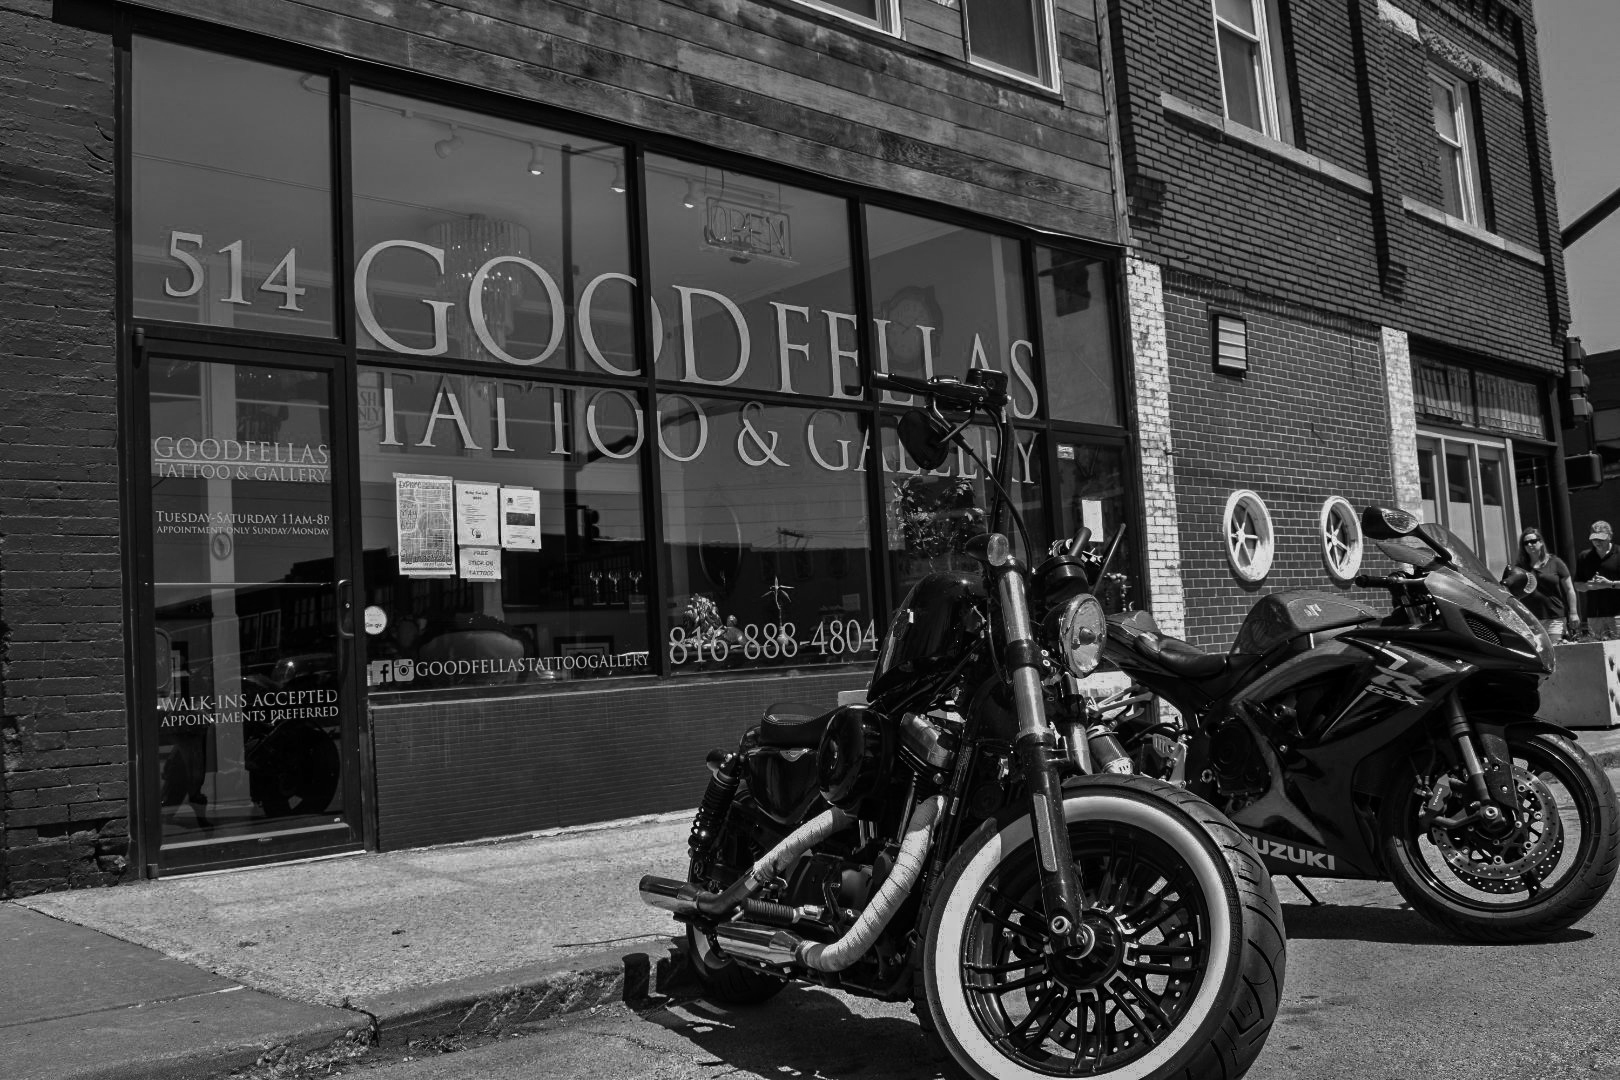 Official Goodfellas Tattoo goodfellastattoo  Instagram photos and videos